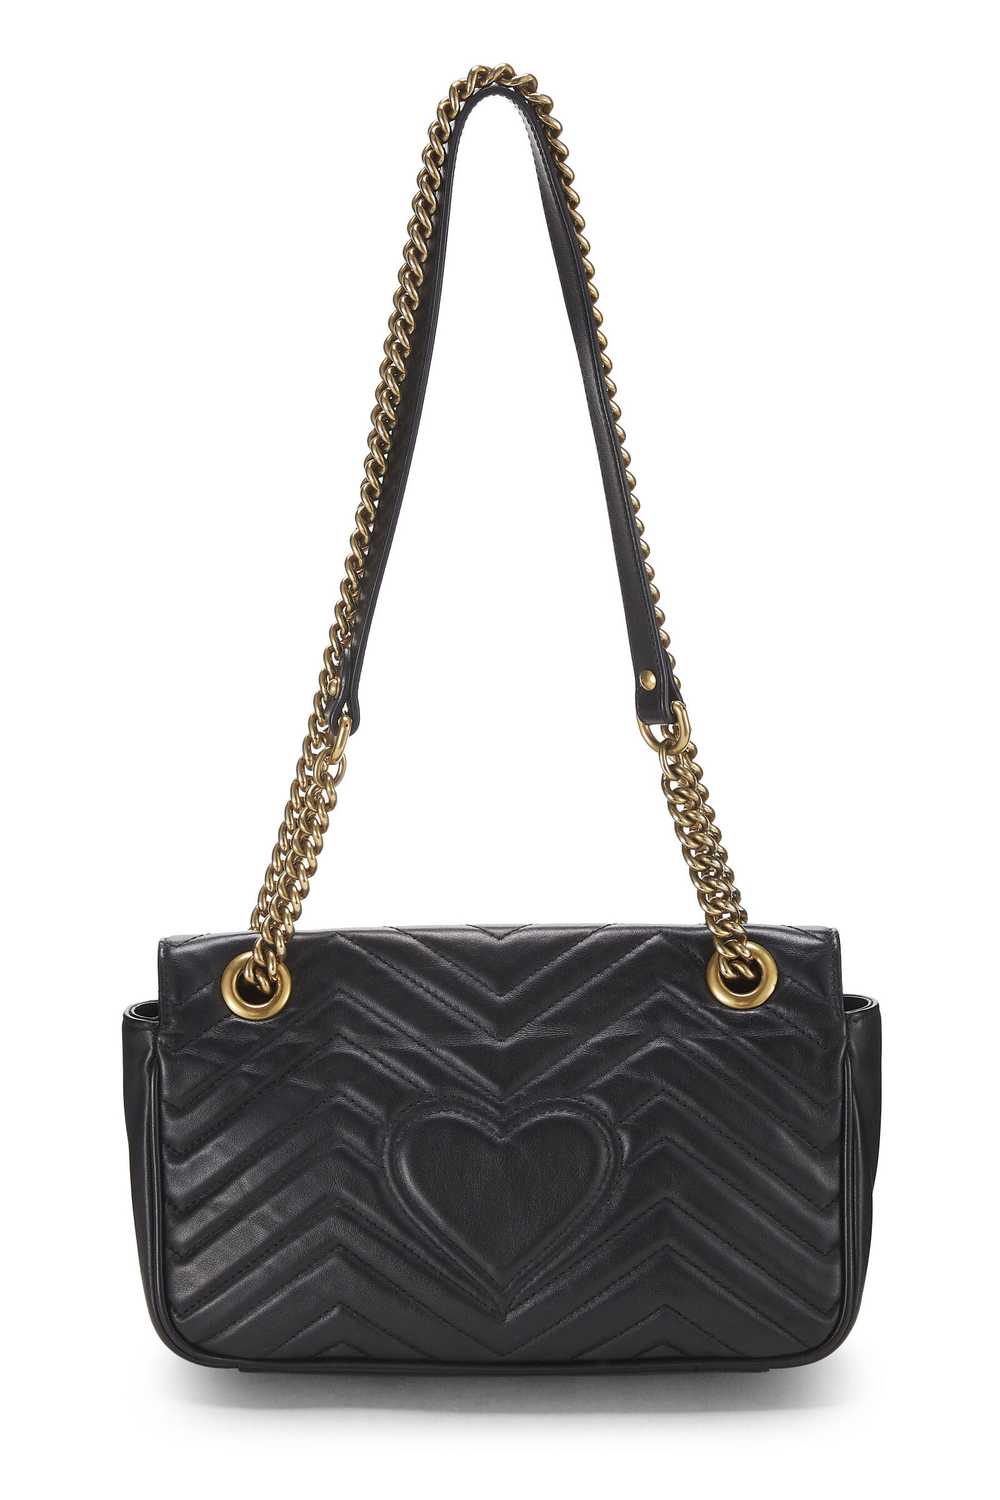 Black Leather GG Marmont Shoulder Bag Small - image 4